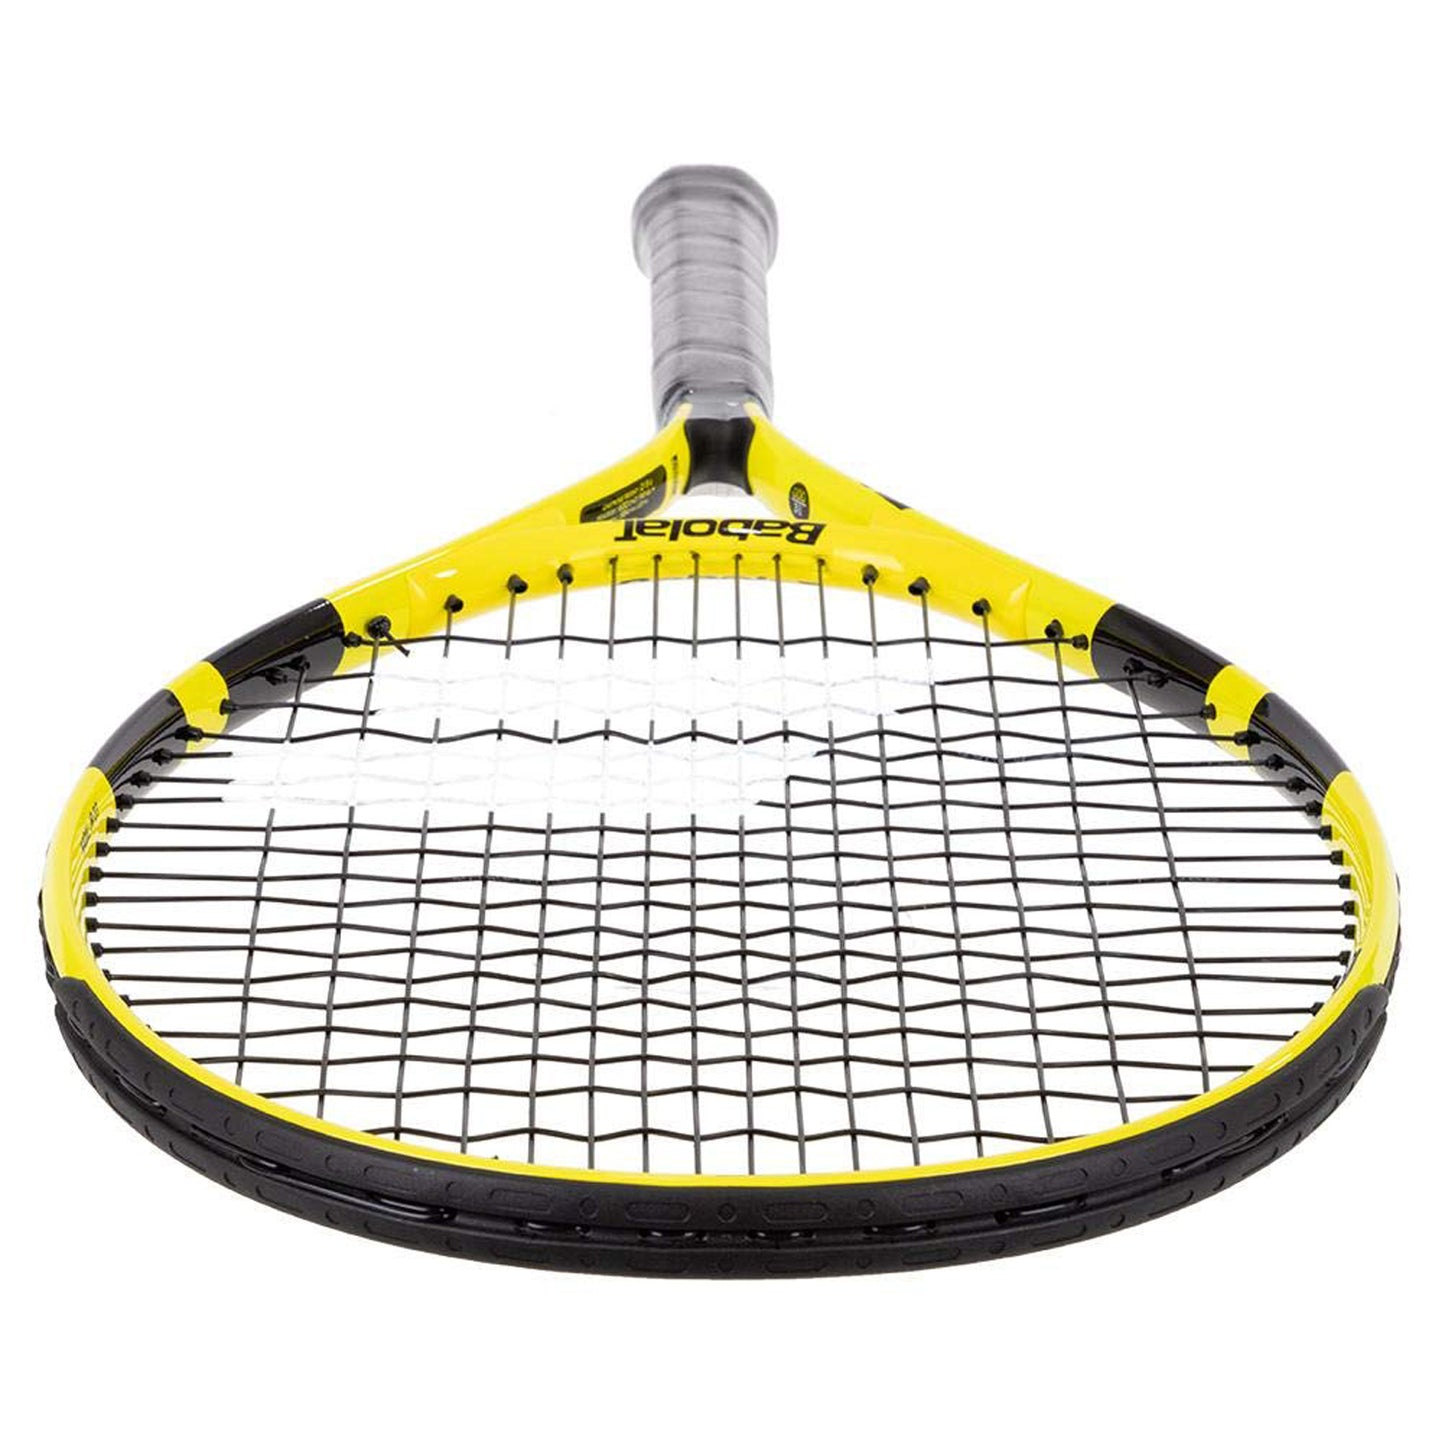 Babolat 140248 Nadal Junior 23 Tennis Racquet - Yellow/Black - Best Price online Prokicksports.com